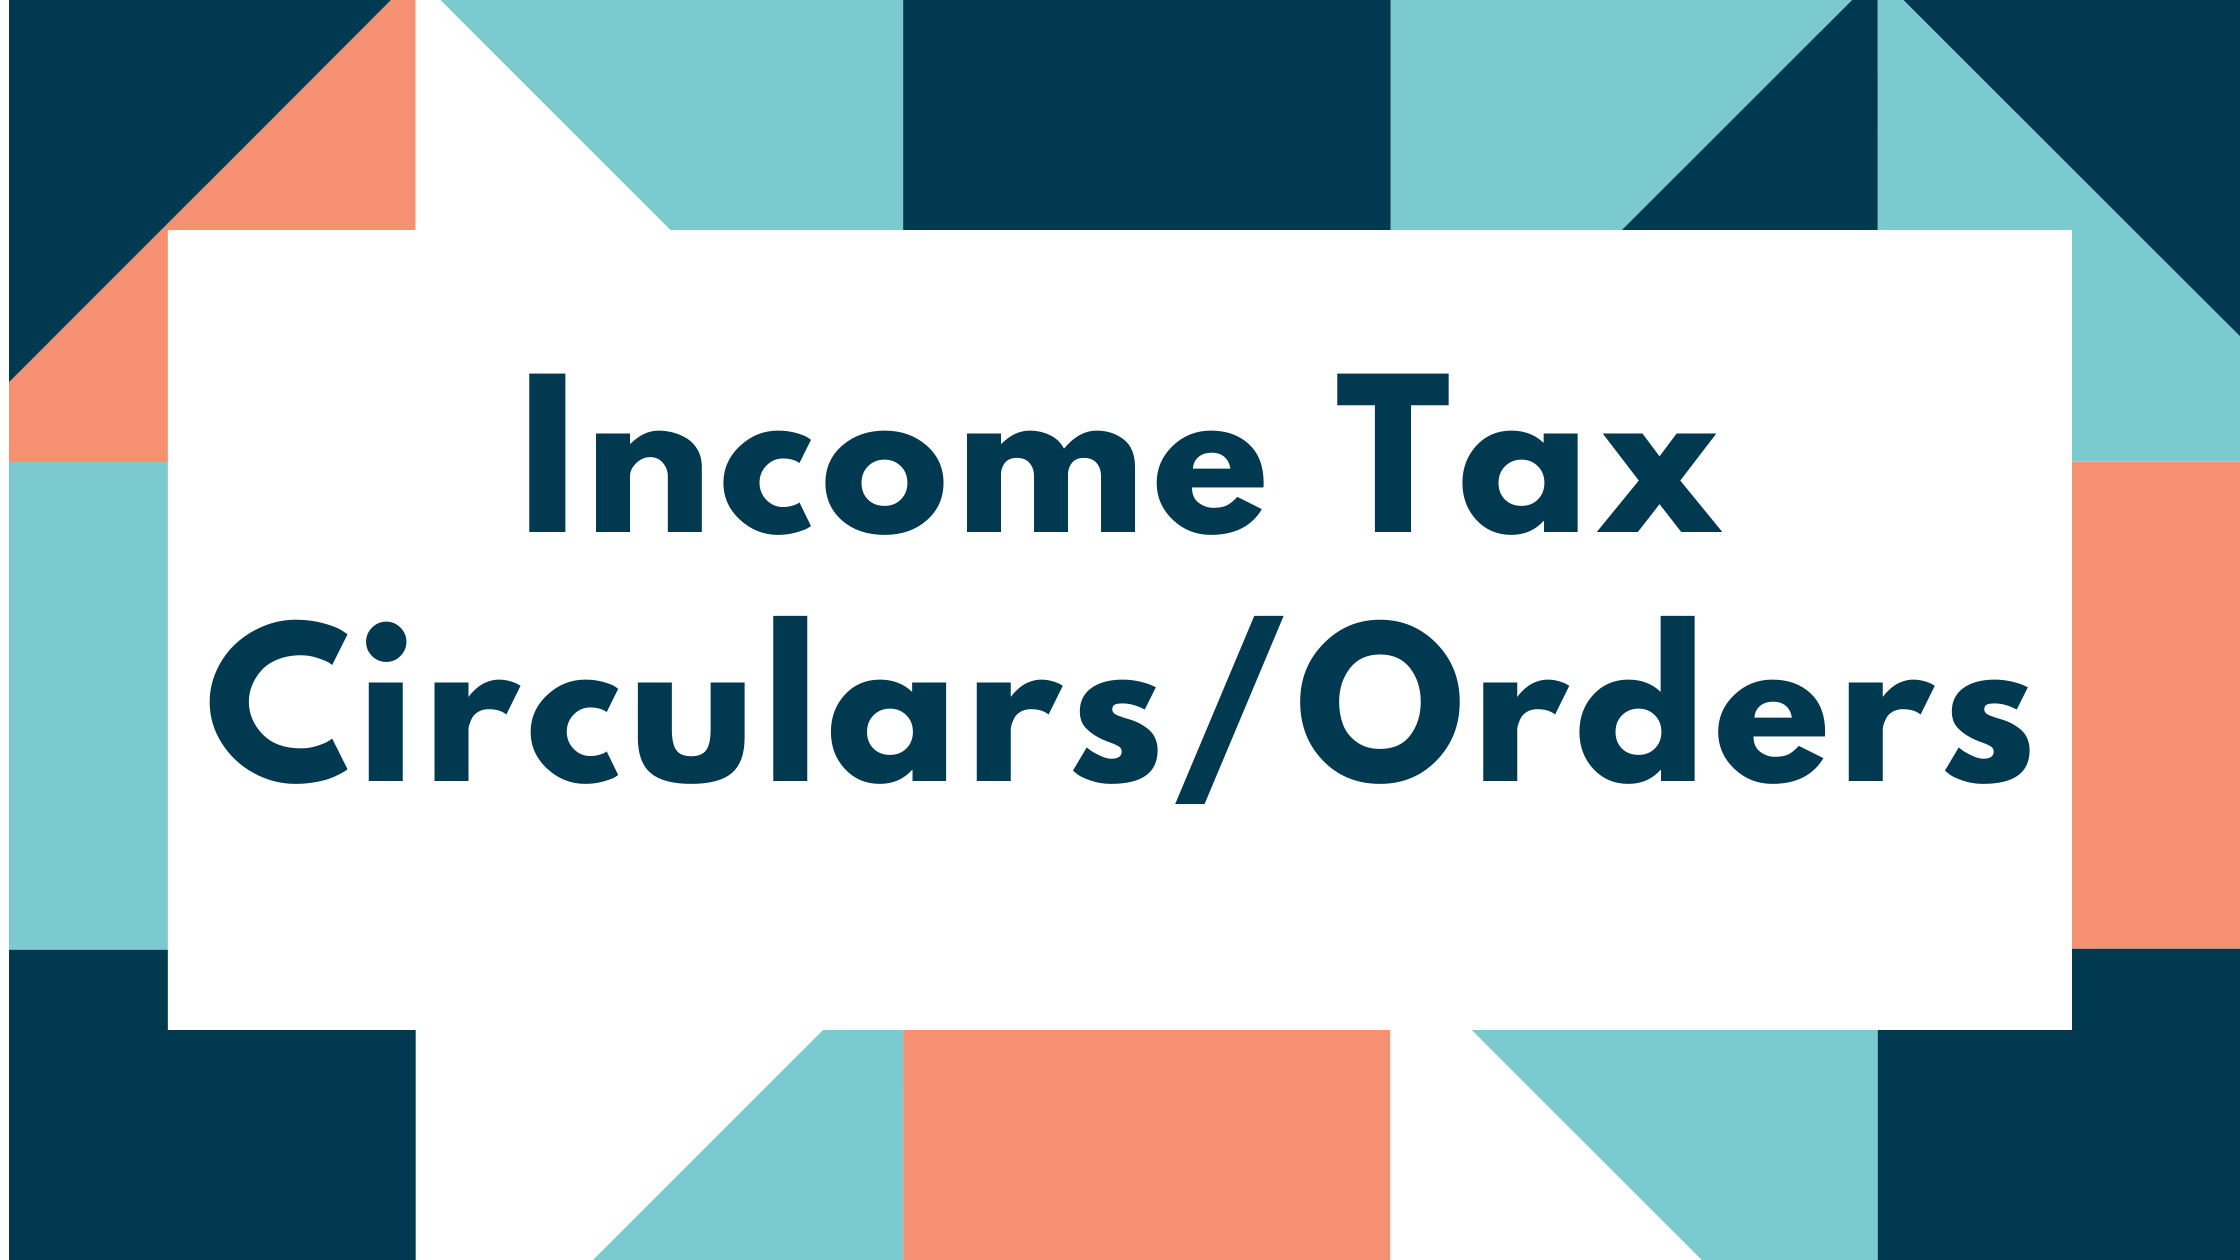 Income Tax Circulars/Orders